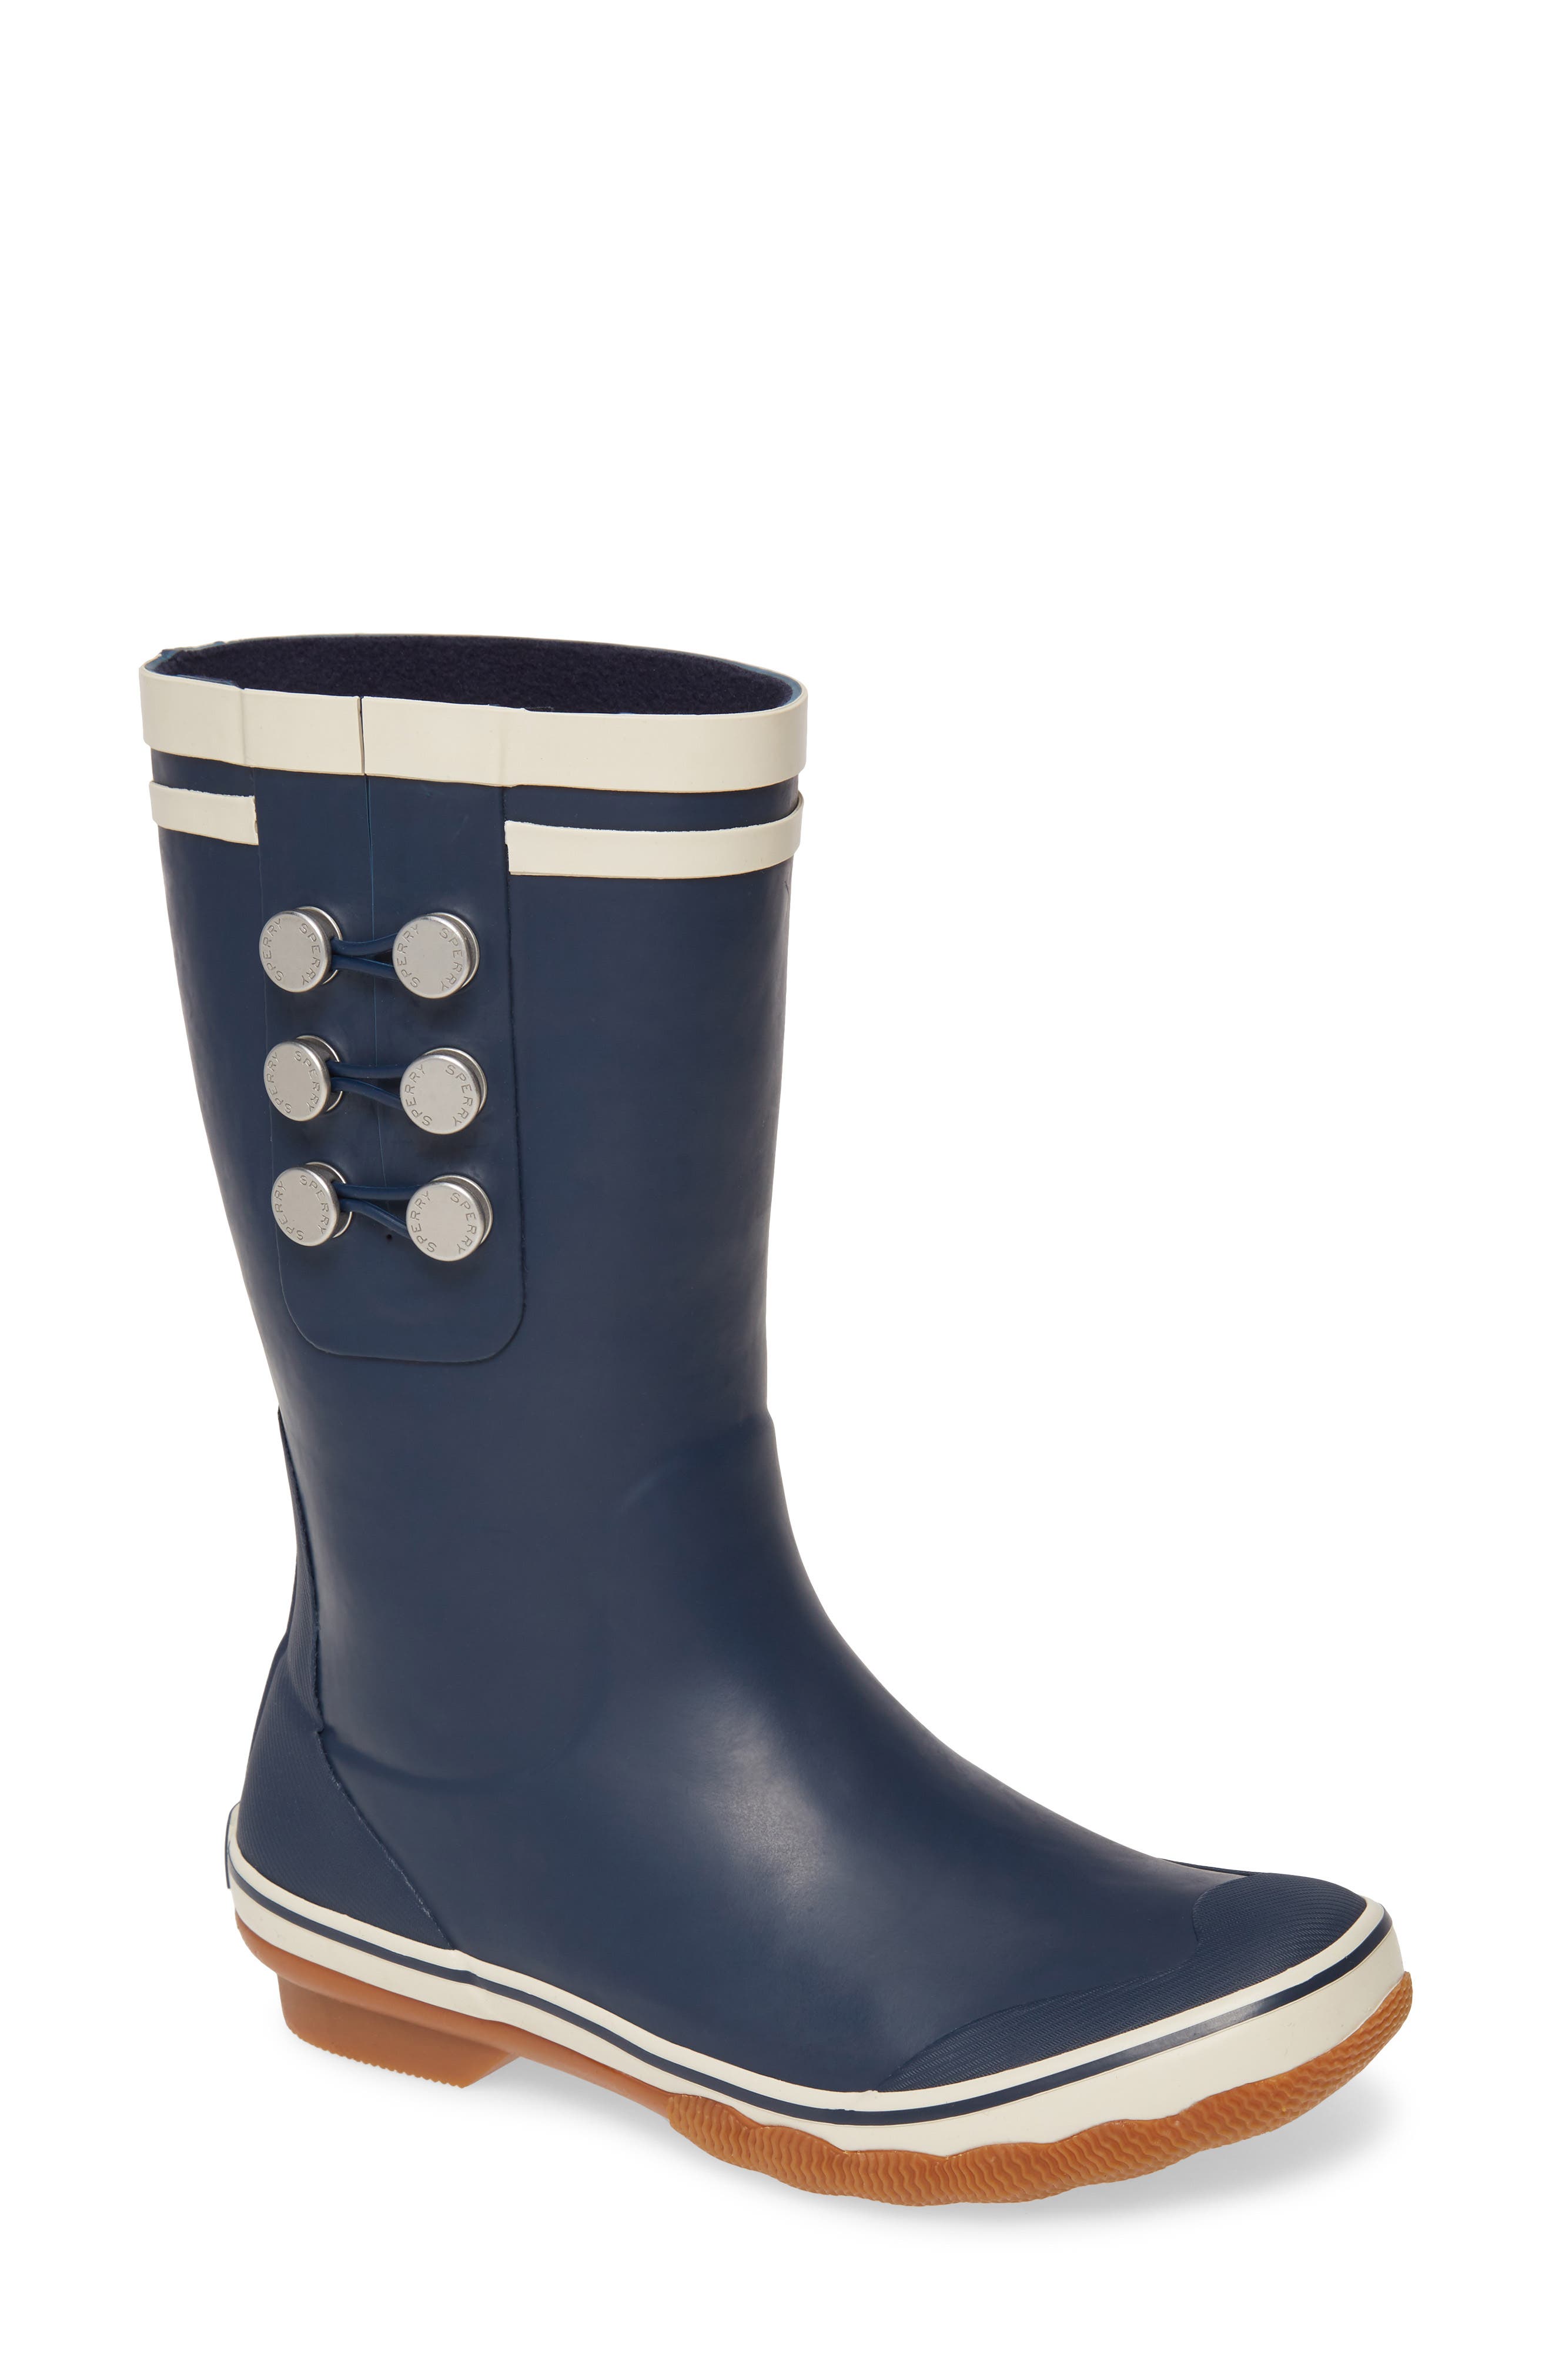 saltwater waterproof rain boot sperry